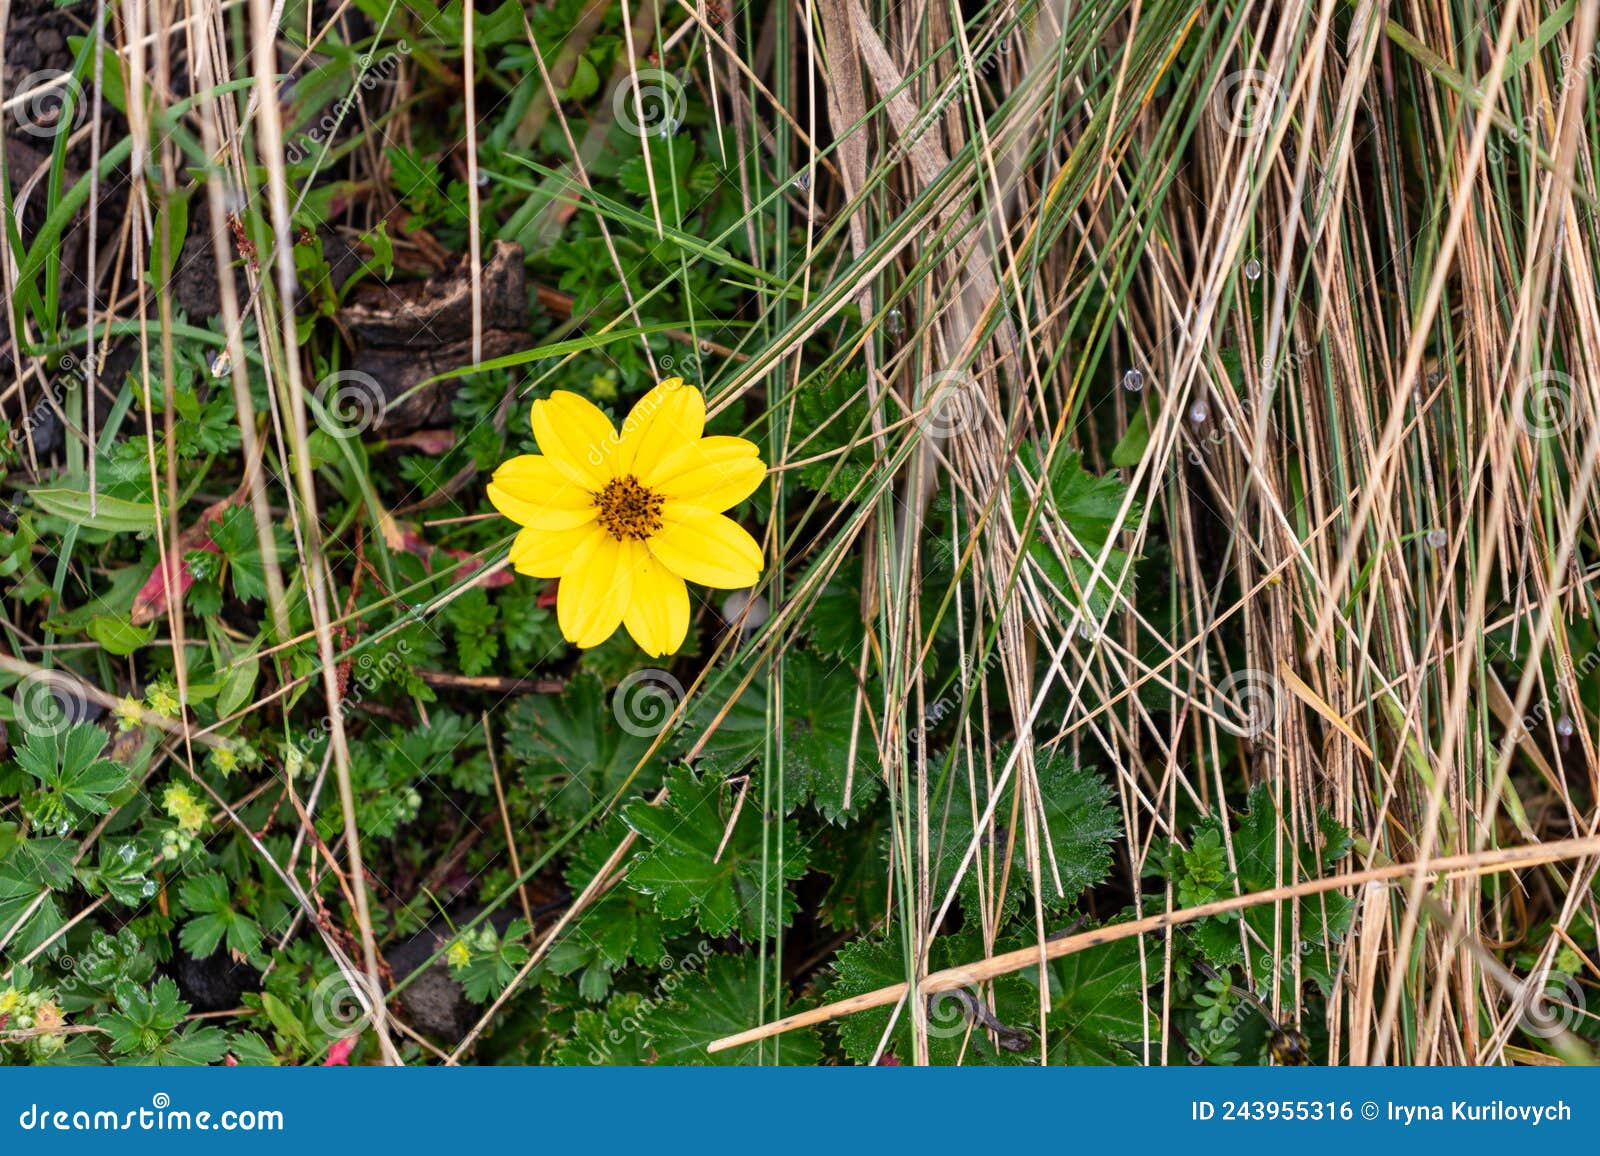 yellow flower of pÃÂ¡ramo called bidens andicola.